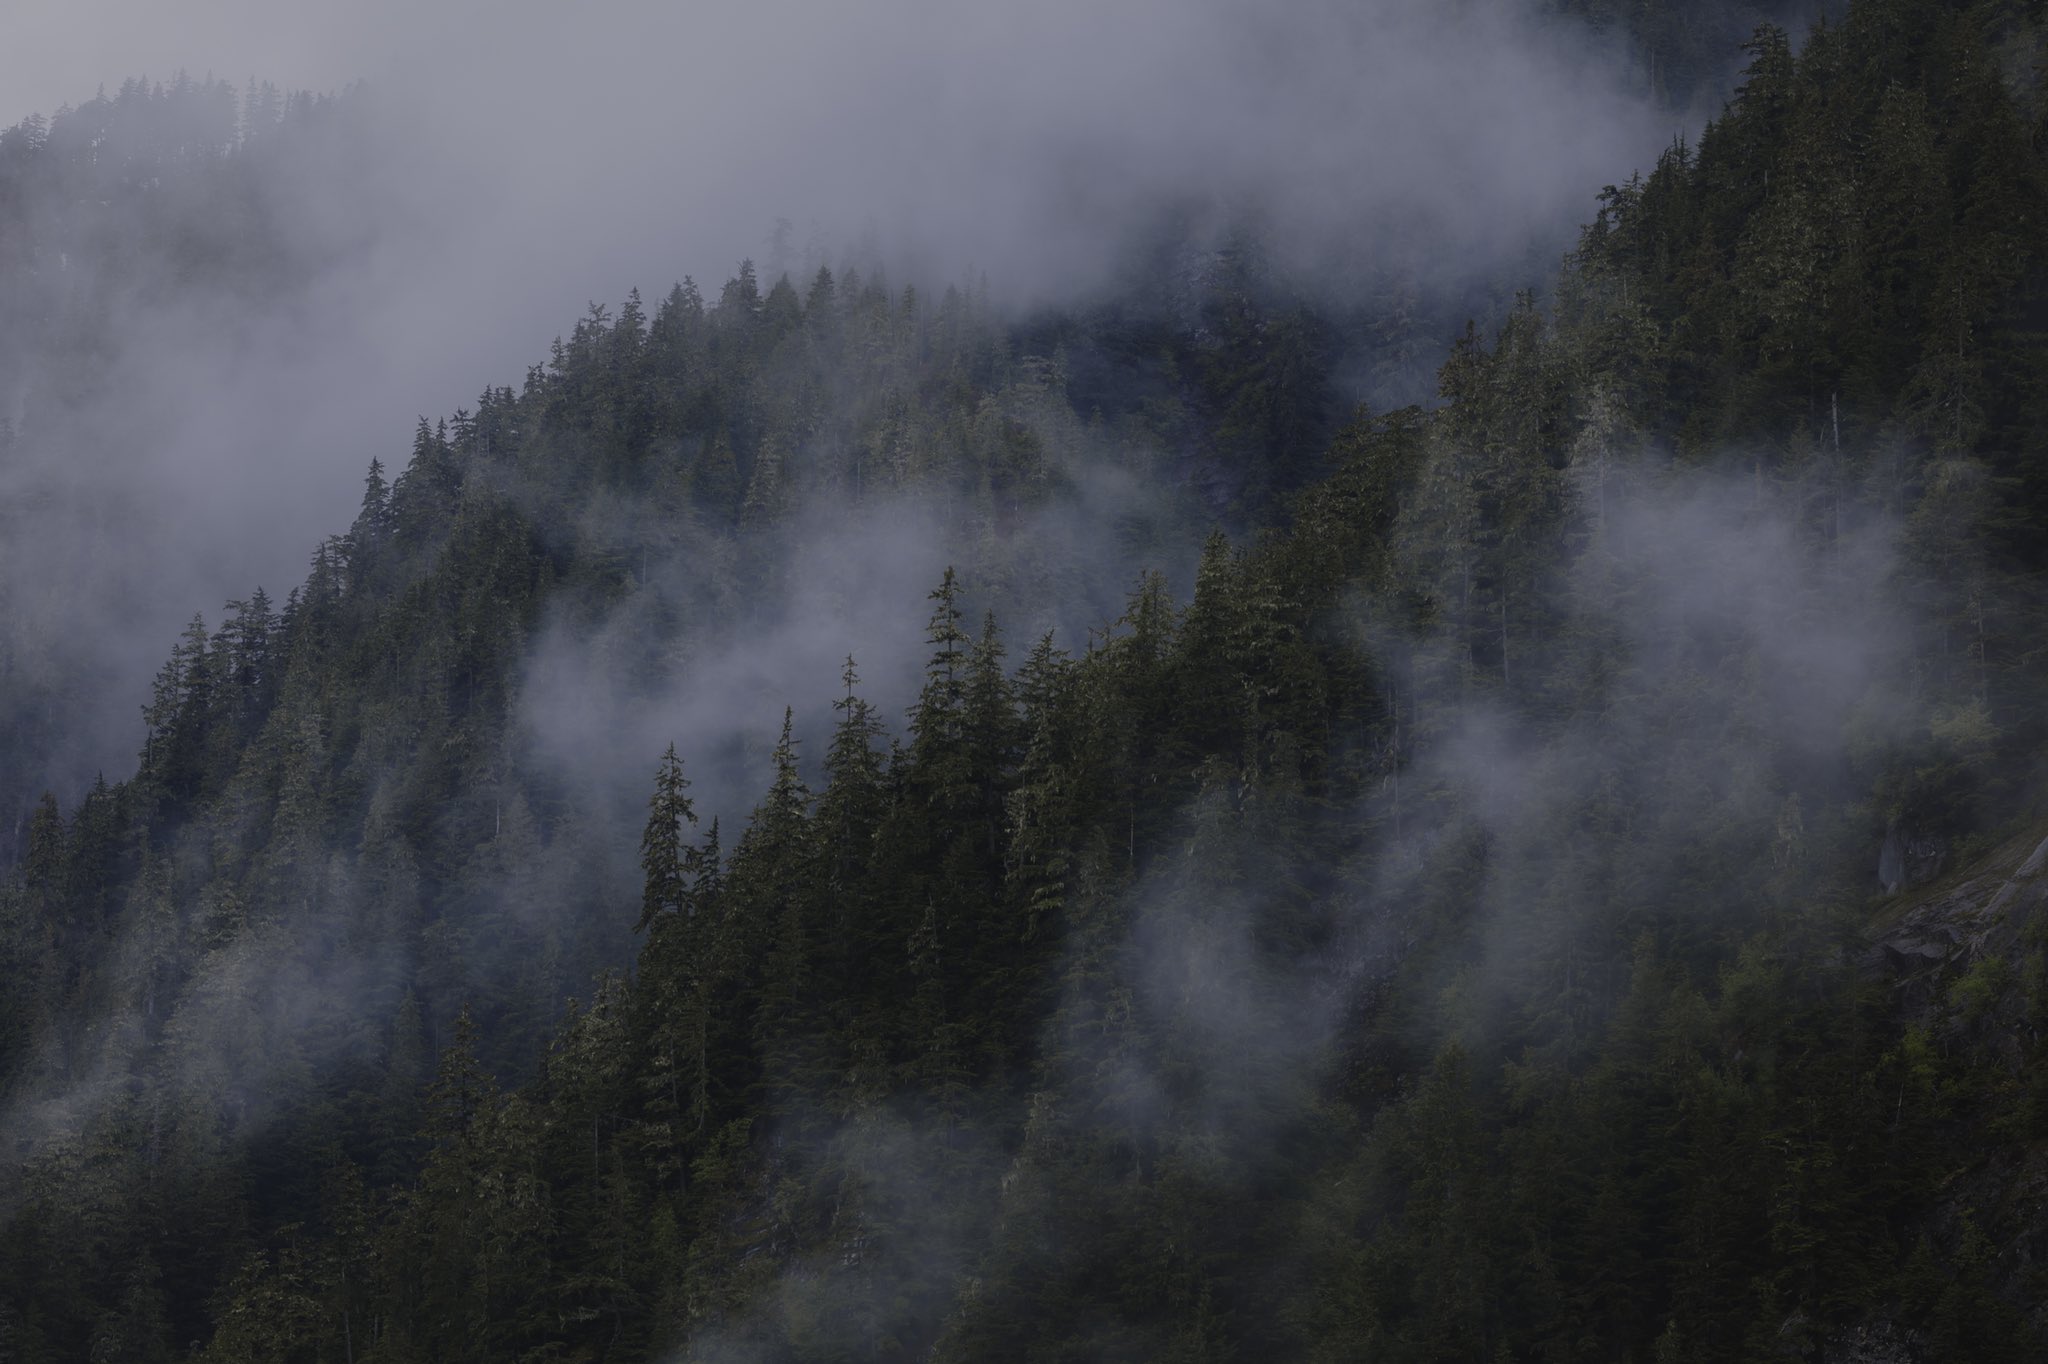 General 2048x1364 nature pine trees mist clouds forest landscape